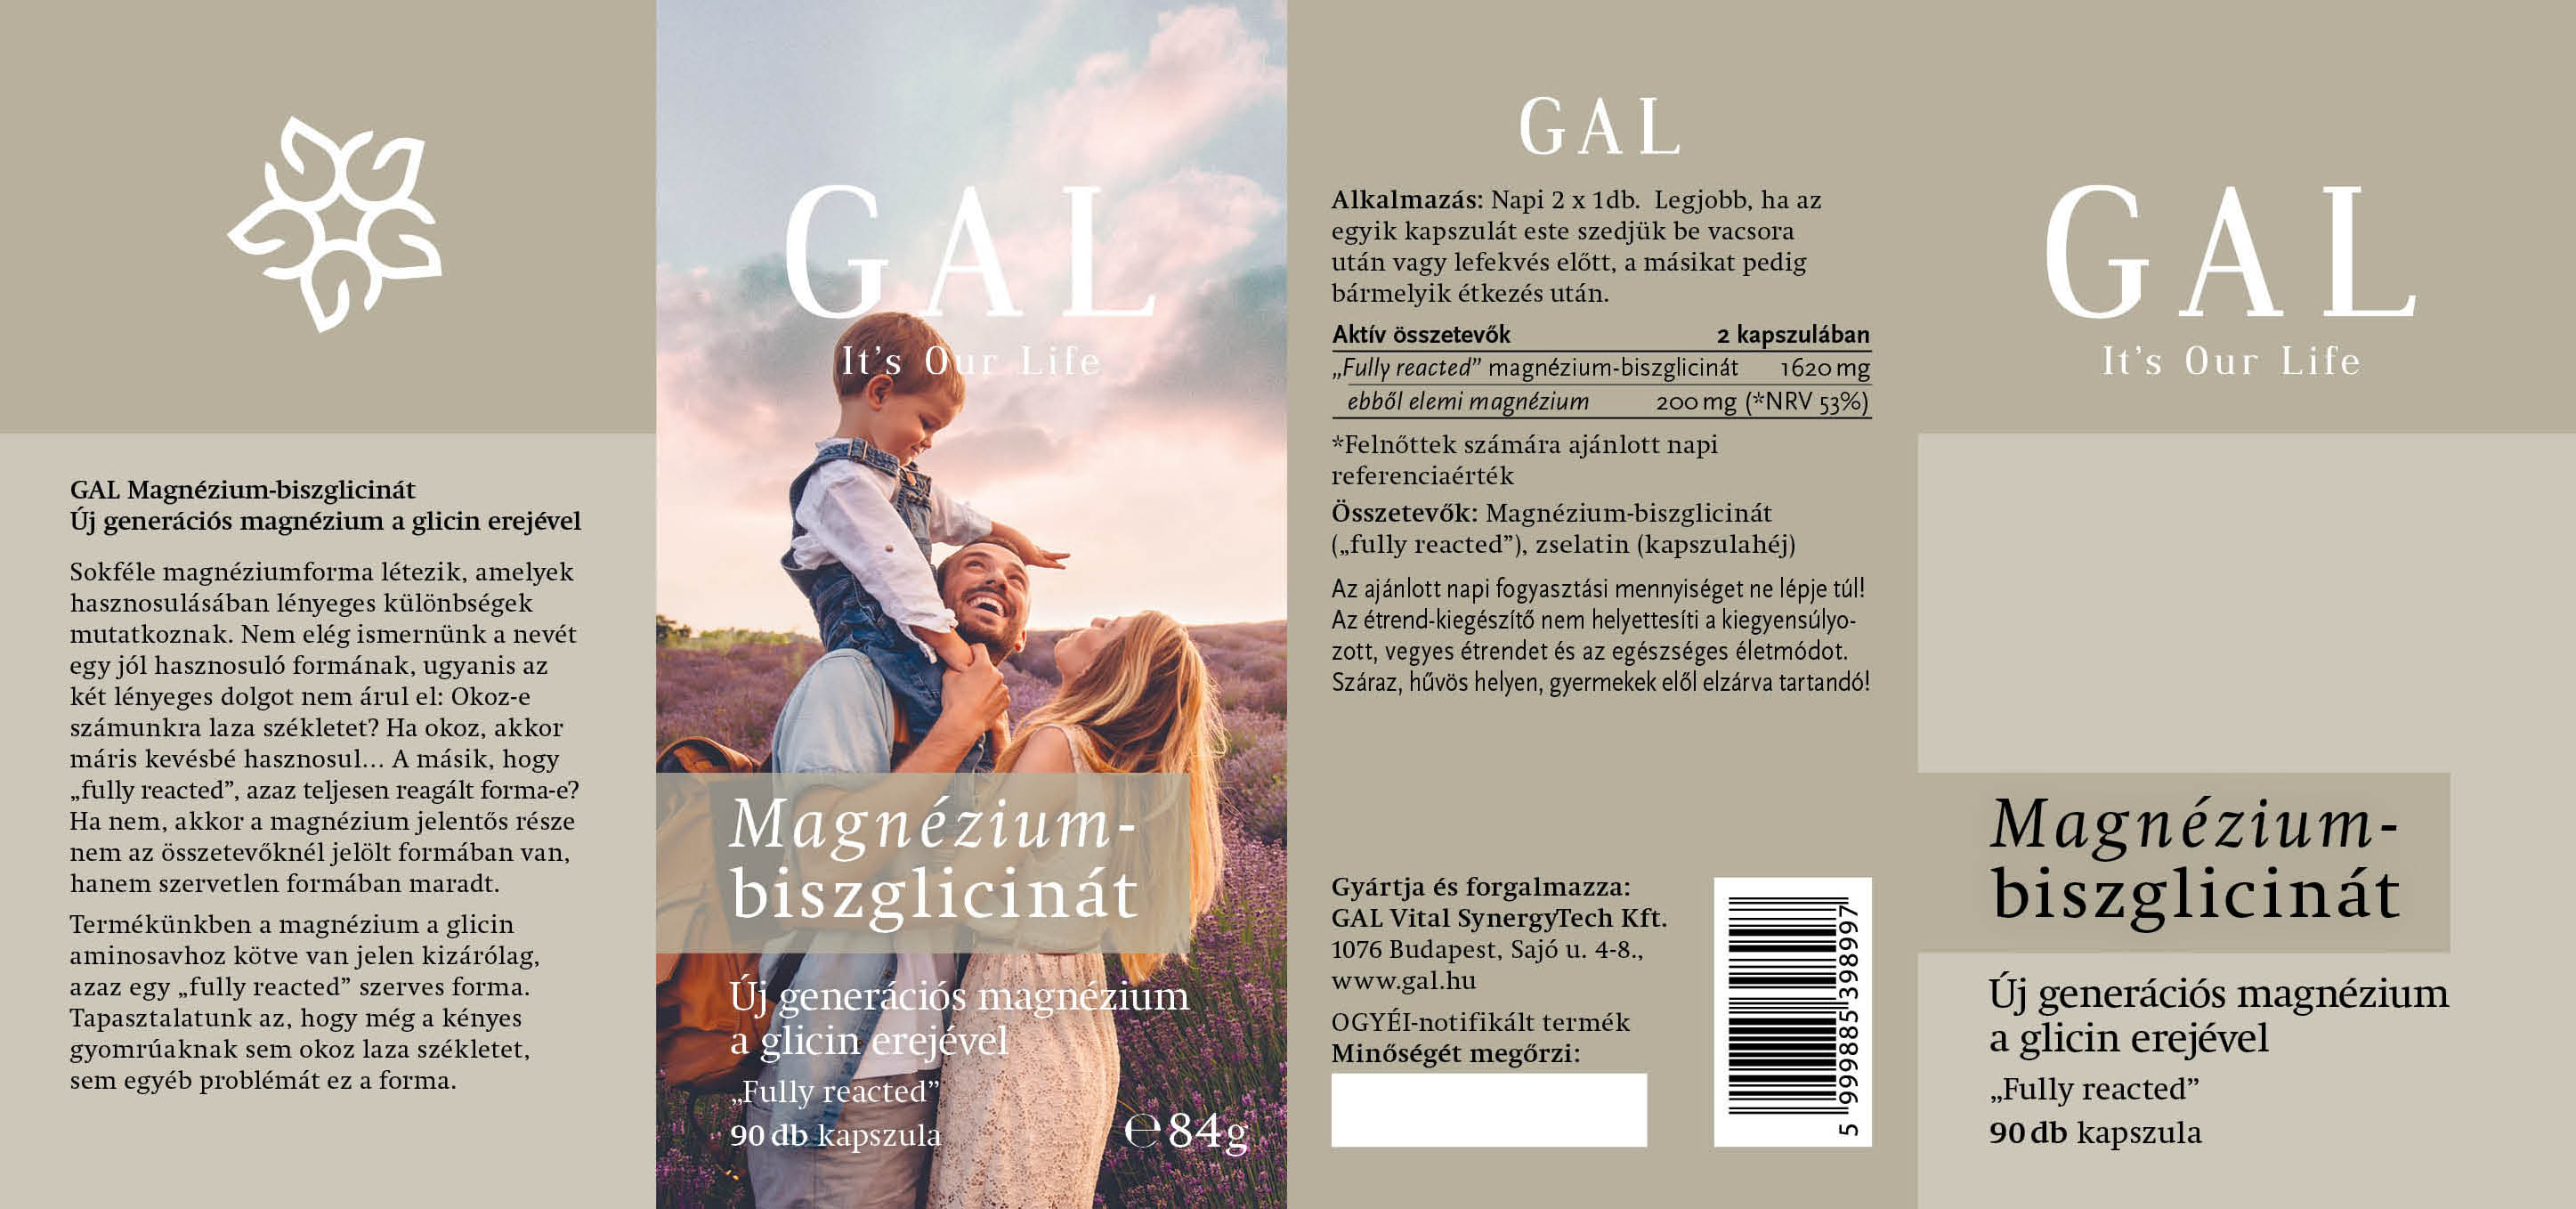 GAL Magnézium-biszglicinát